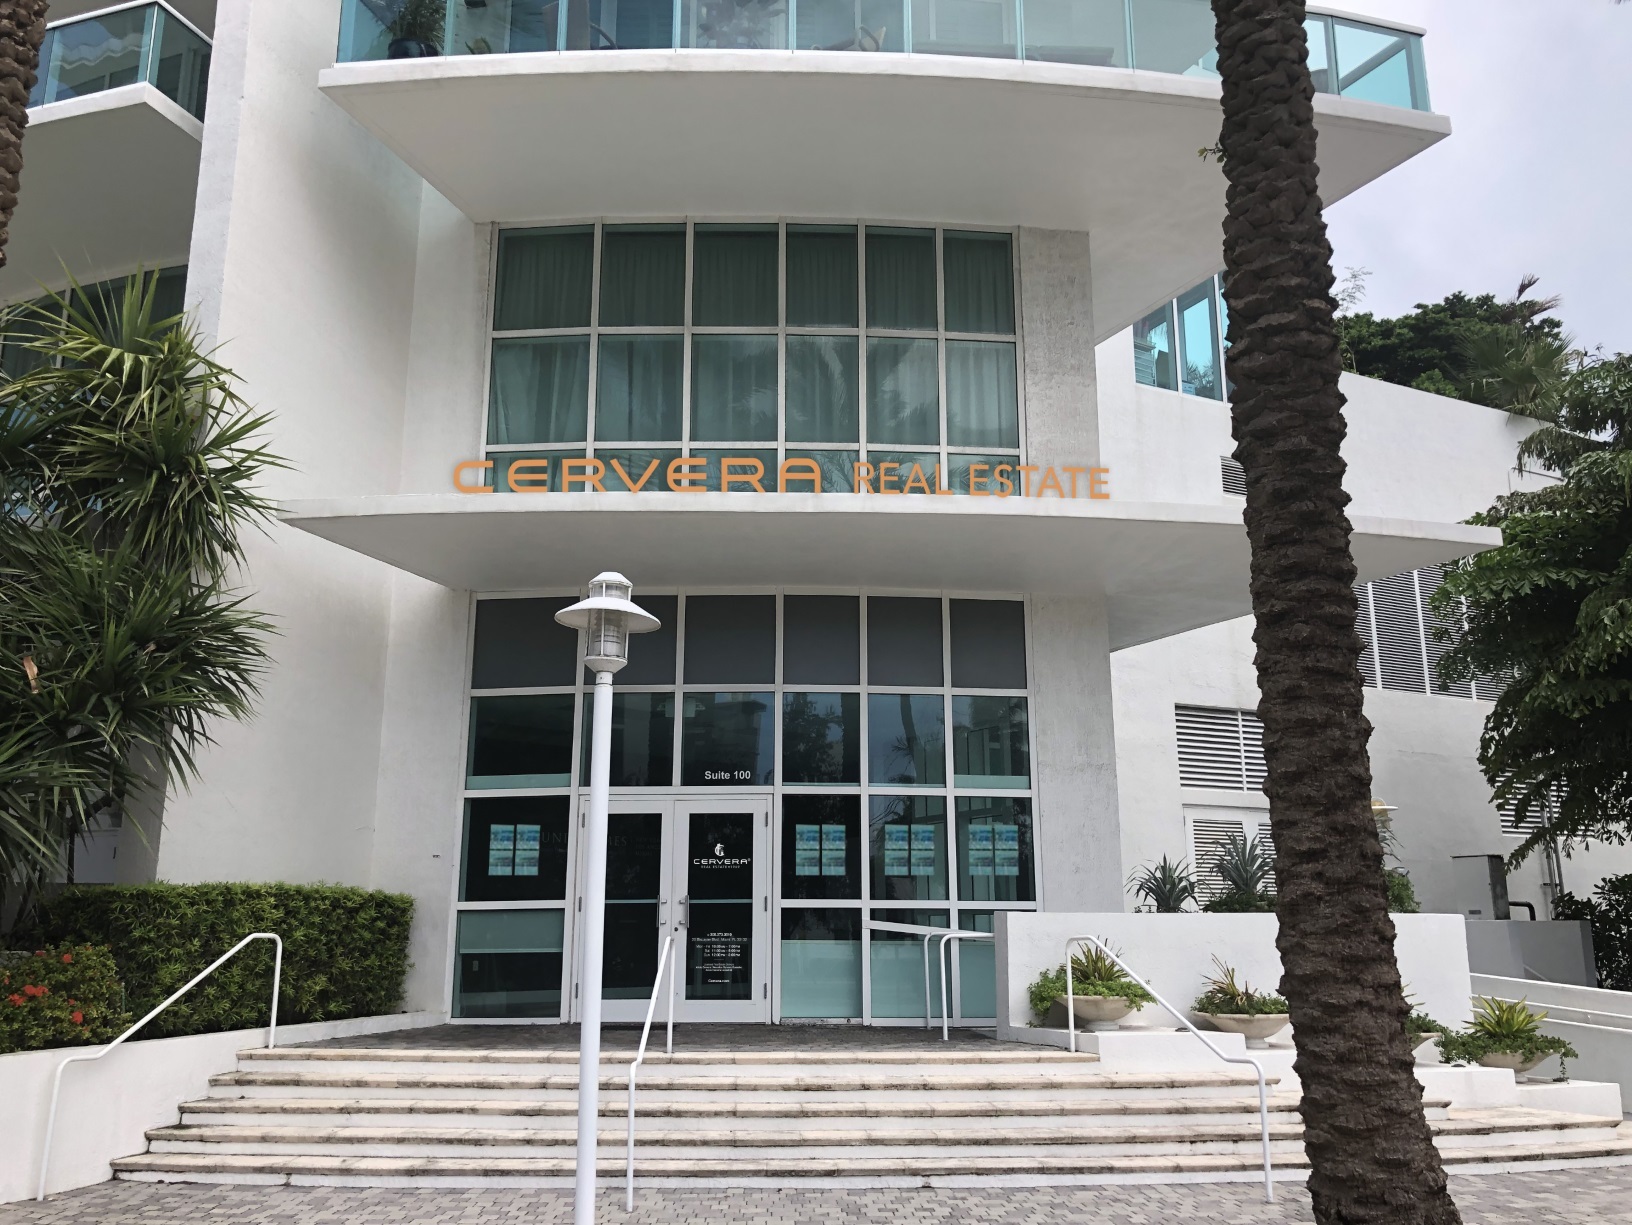 South Beach,Miami Beach,Cervera Real Estate